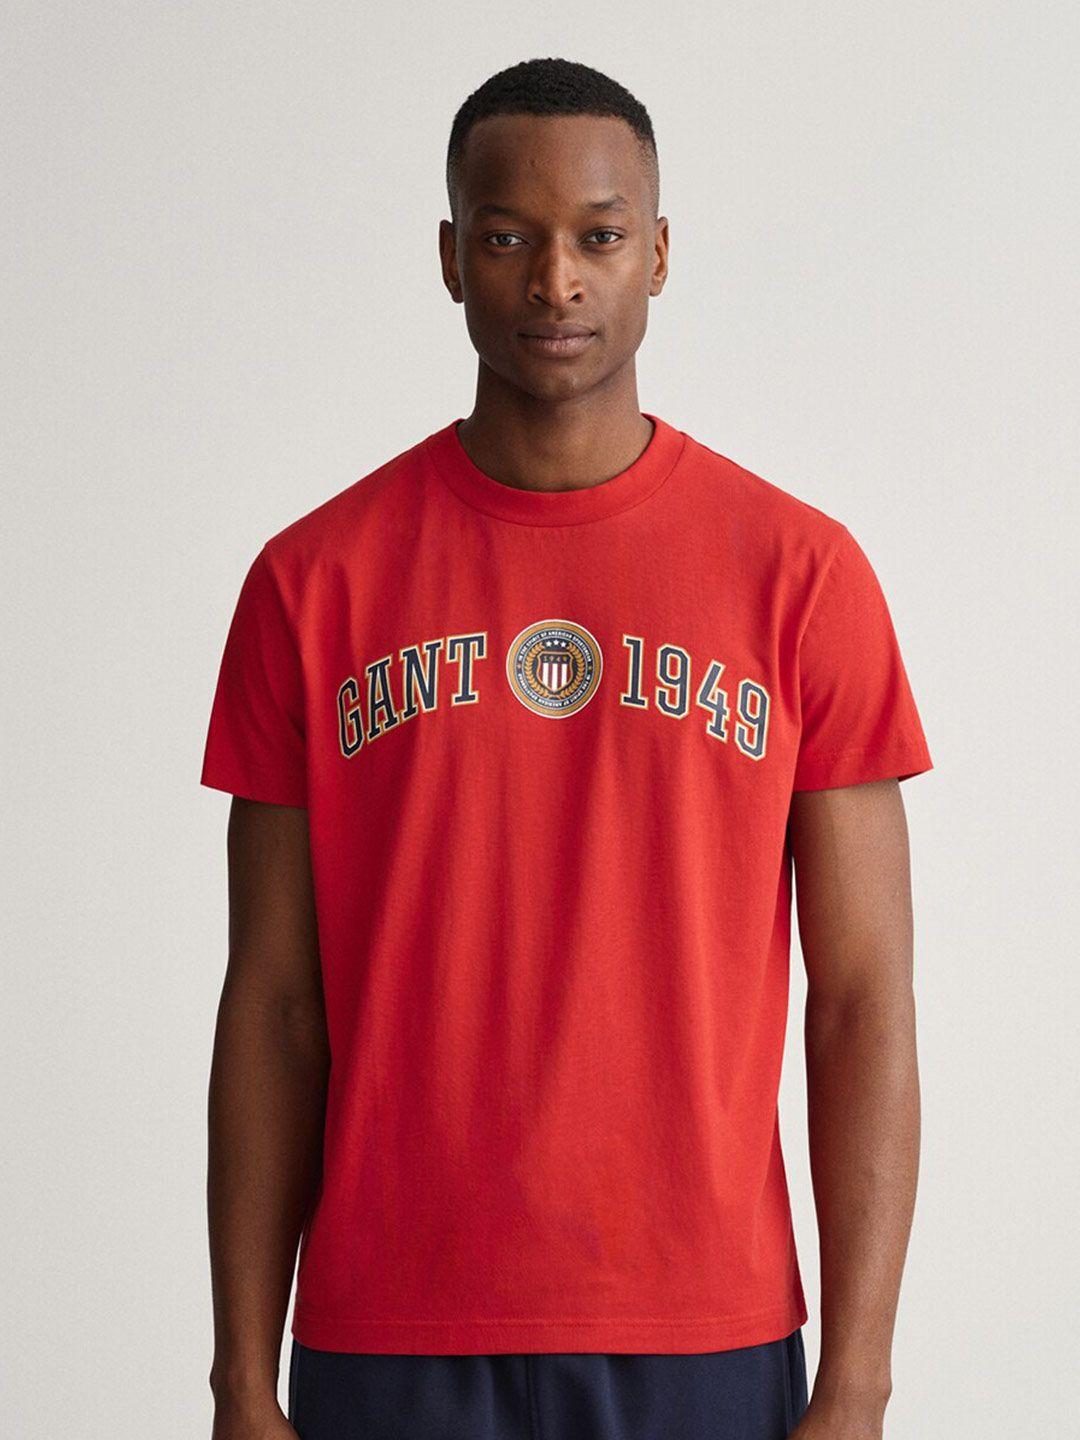 gant men red & navy blue typography printed t-shirt